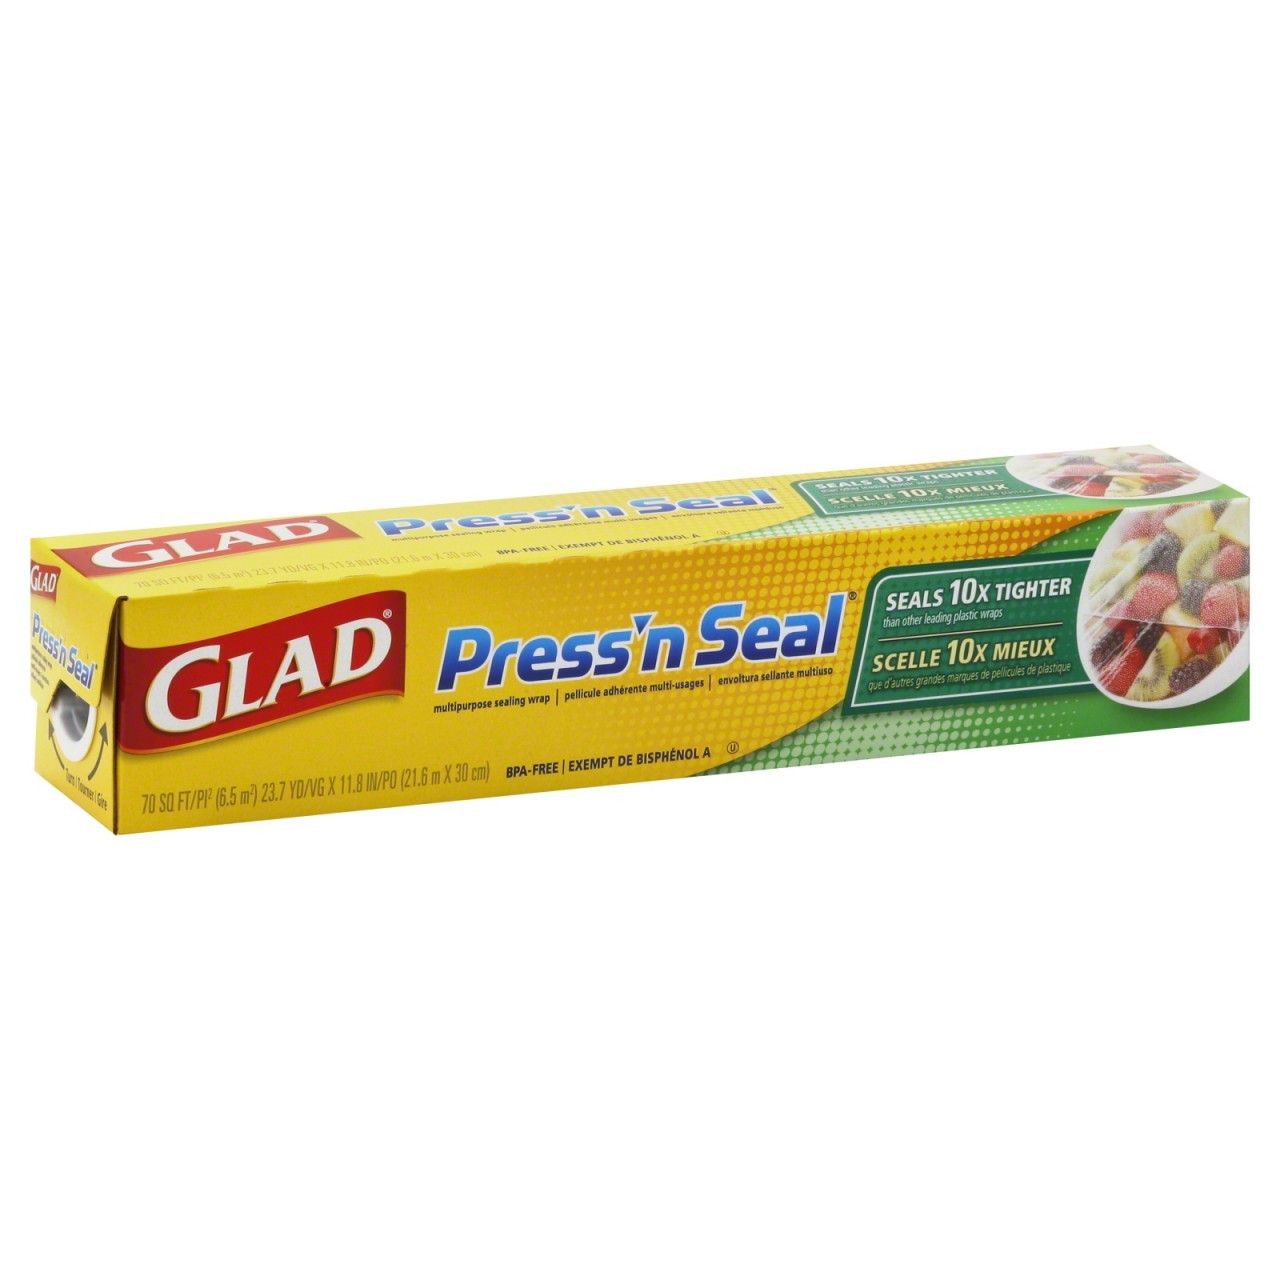 GLAD PRESS N SEAL 70sqft